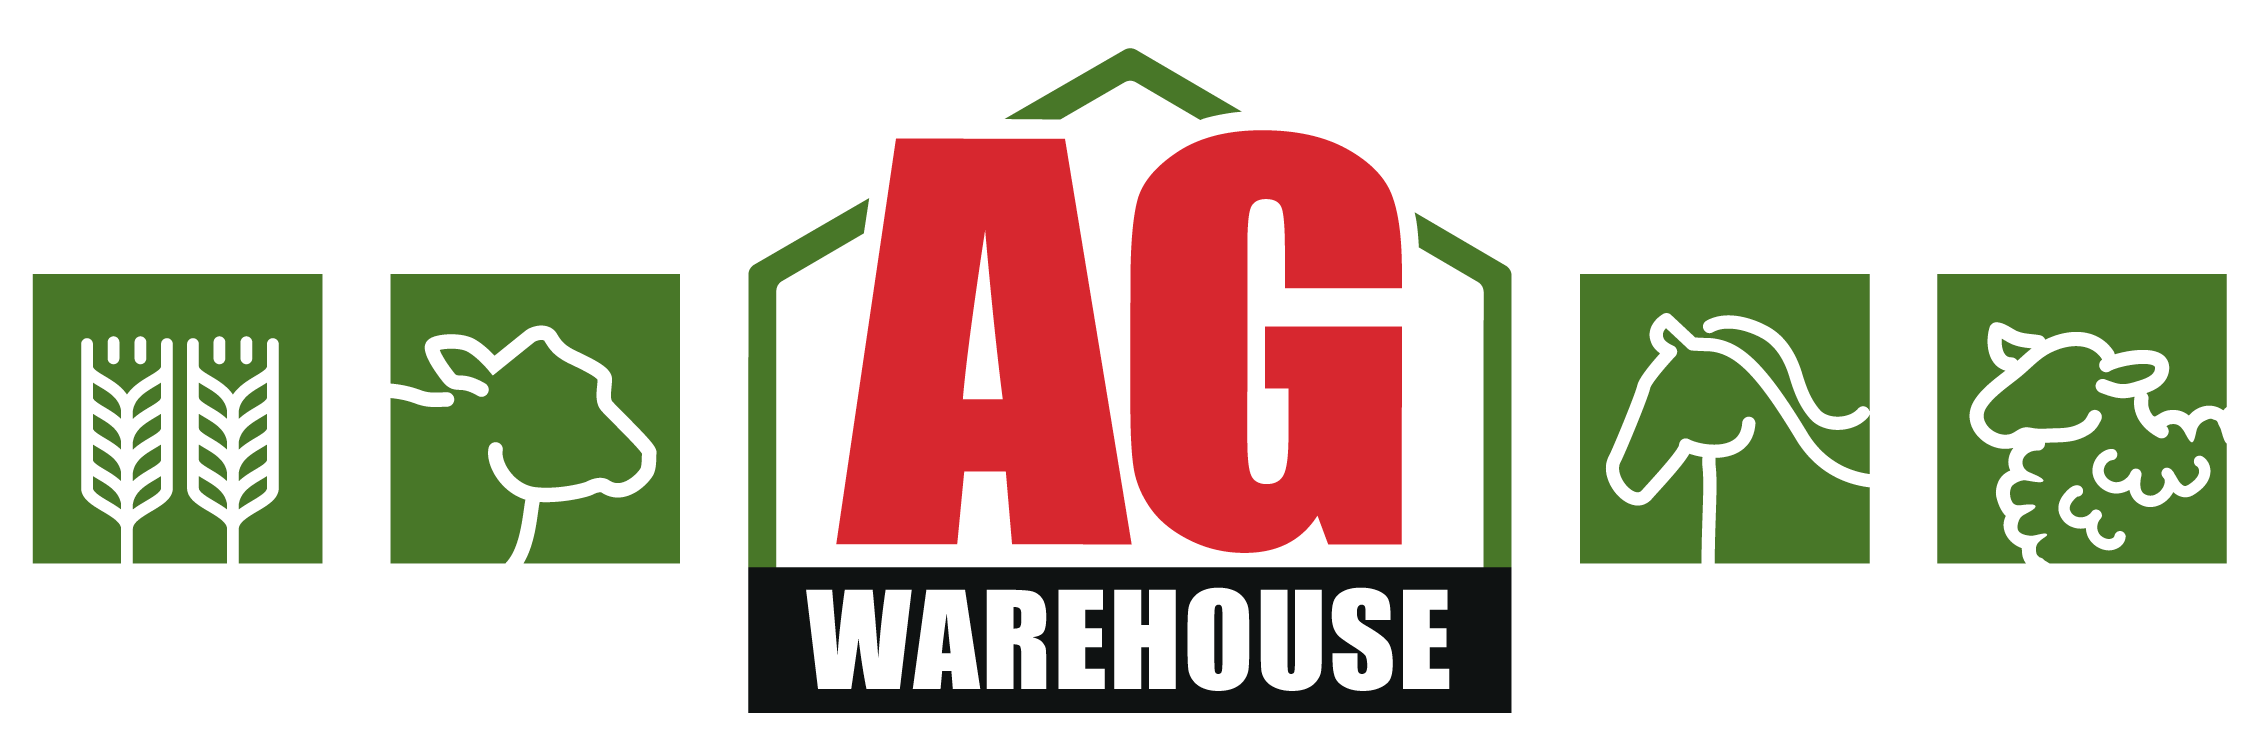 Primary AG Warehouse logo horizontal (002).png